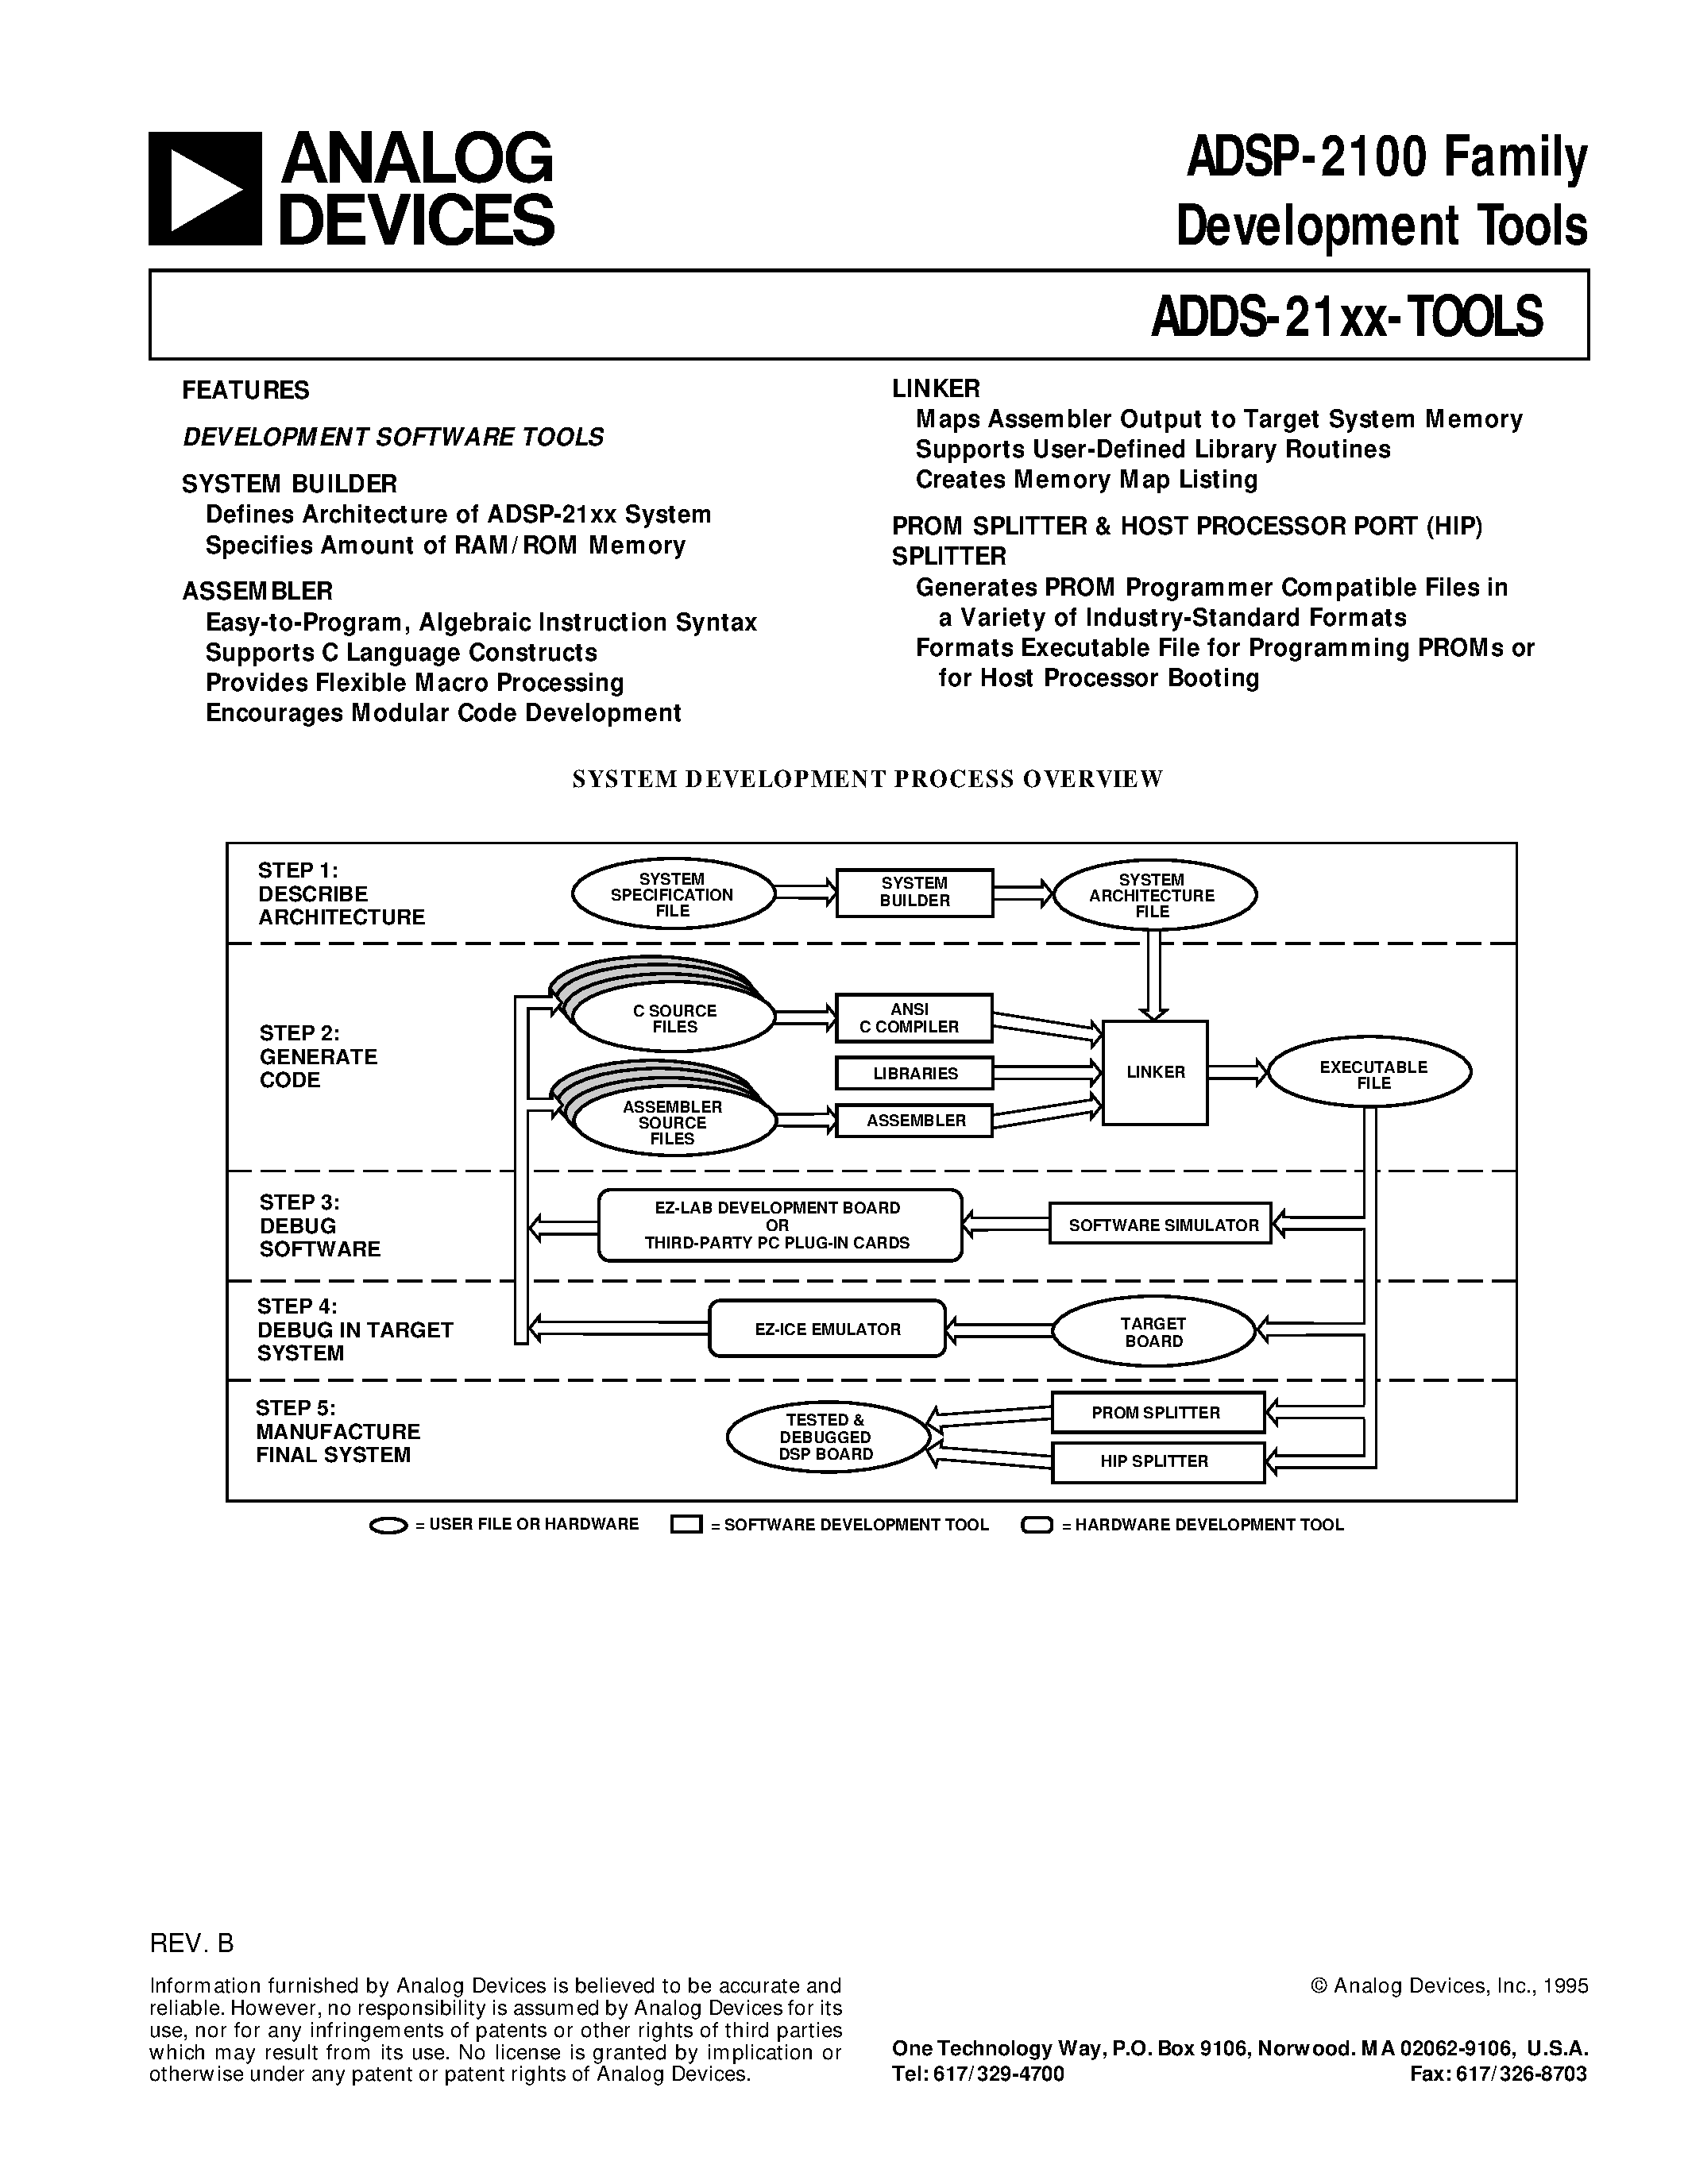 Даташит ADDS-2171-EZ-ICE - ADSP-2100 Family Development Tools страница 1